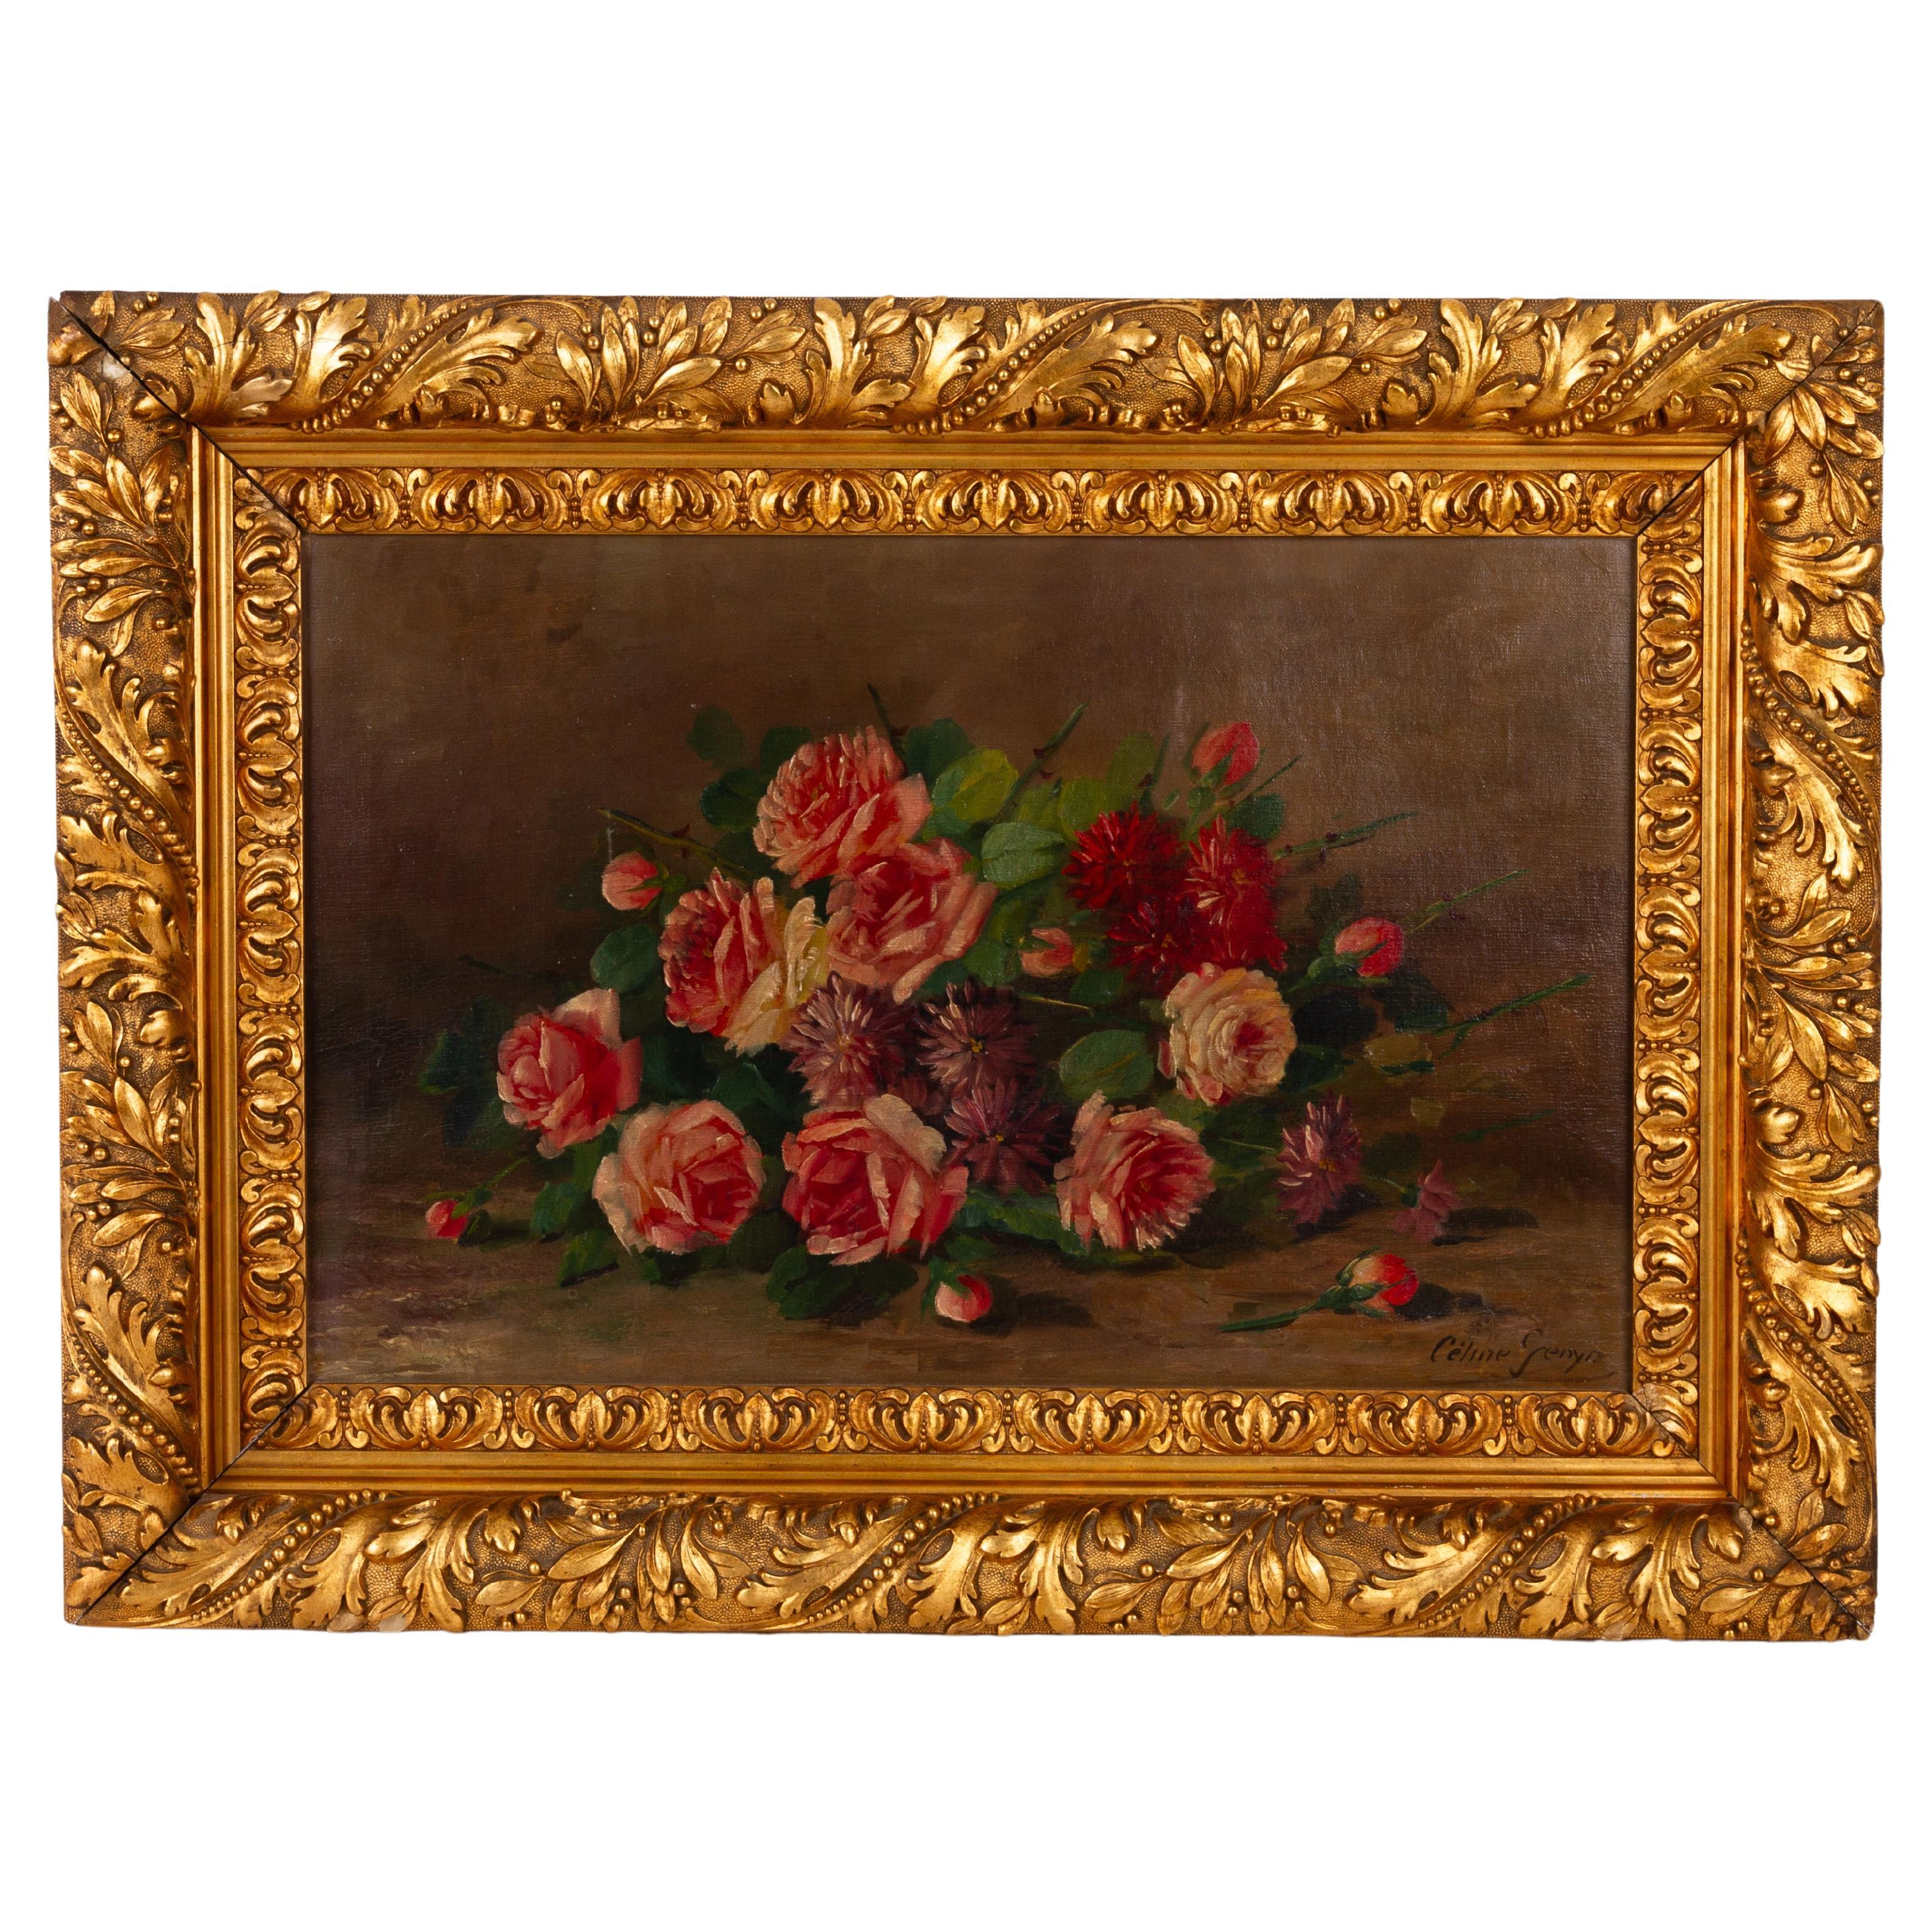 Celine Genyn Still Life Flowers Signed Belgian Oil Painting Early 20thC